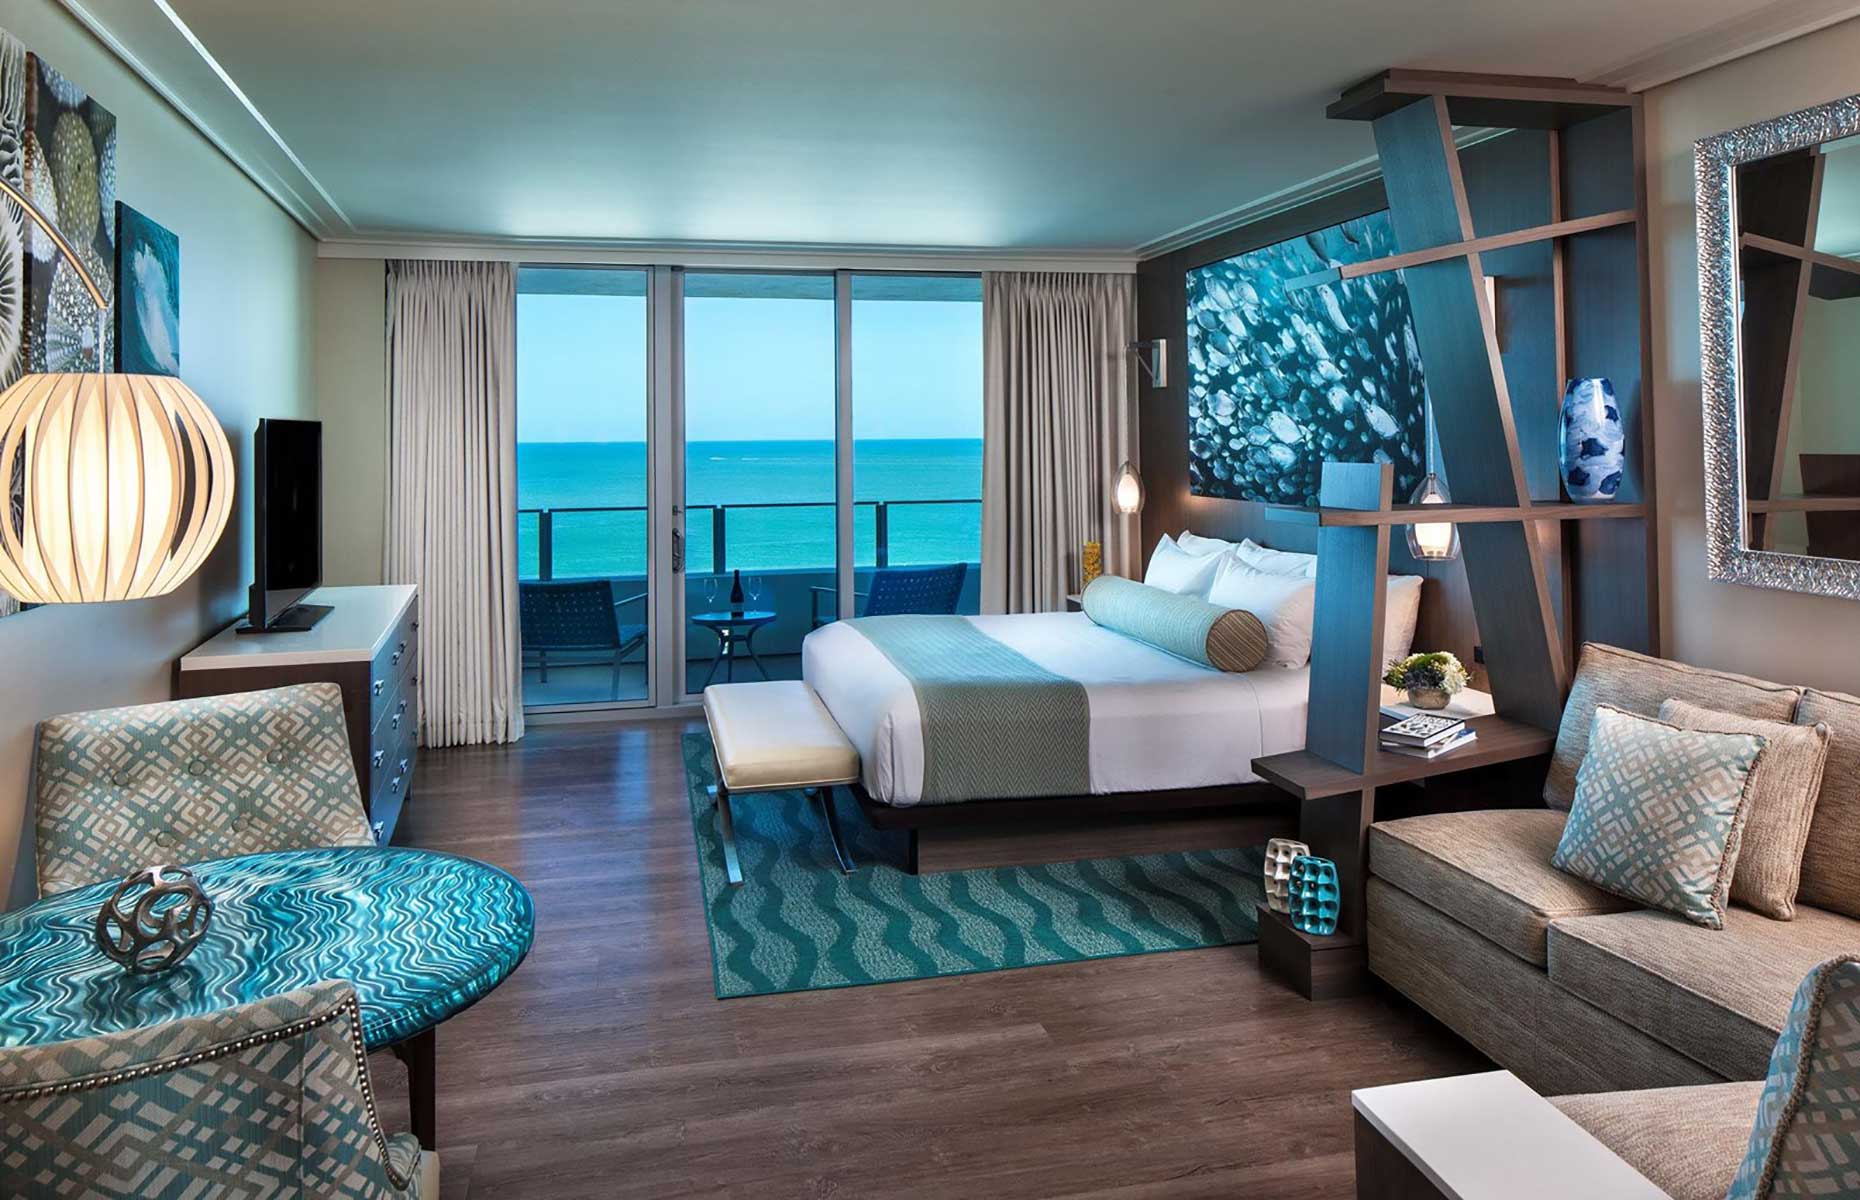 King suite in the Opal Sands Resort (Image: Opalsands.com)